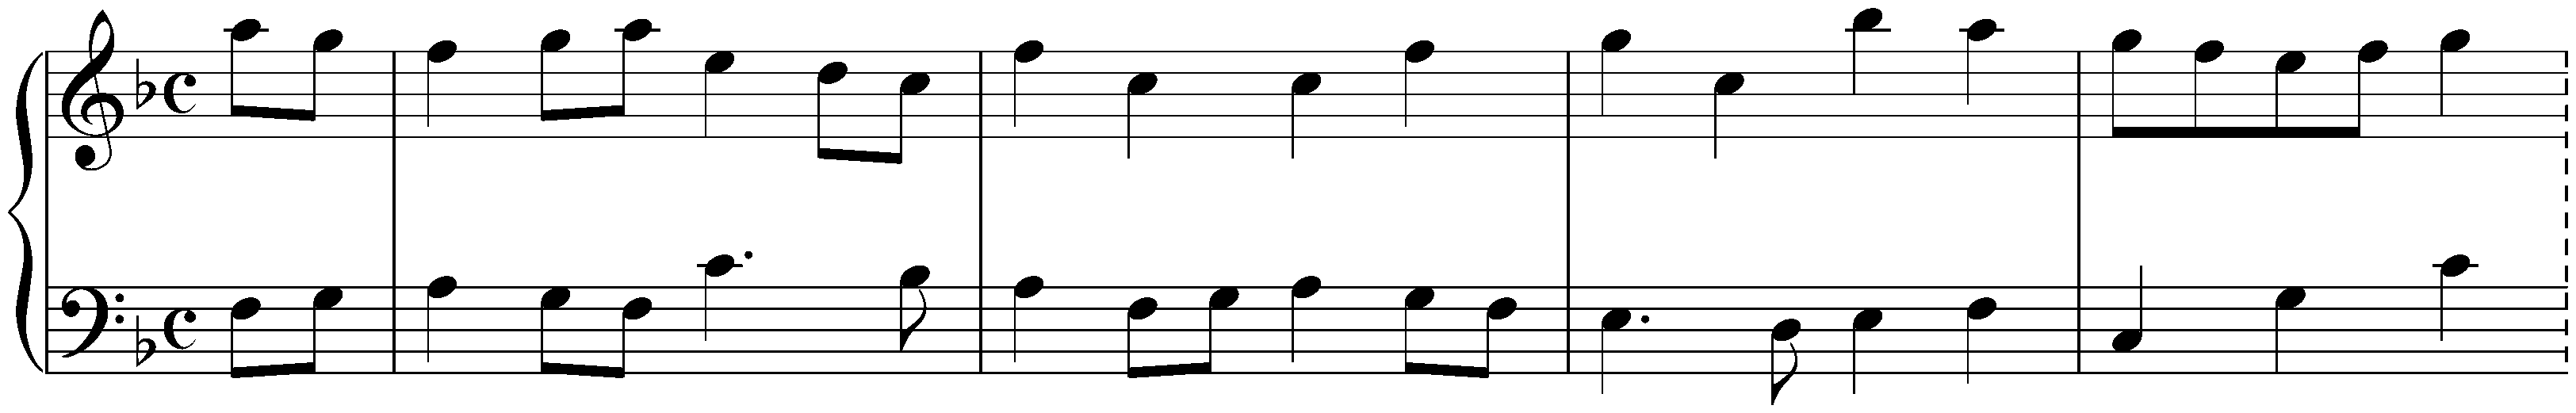 Overture (Suite) in F major, BWV 820; 4. Bourrée